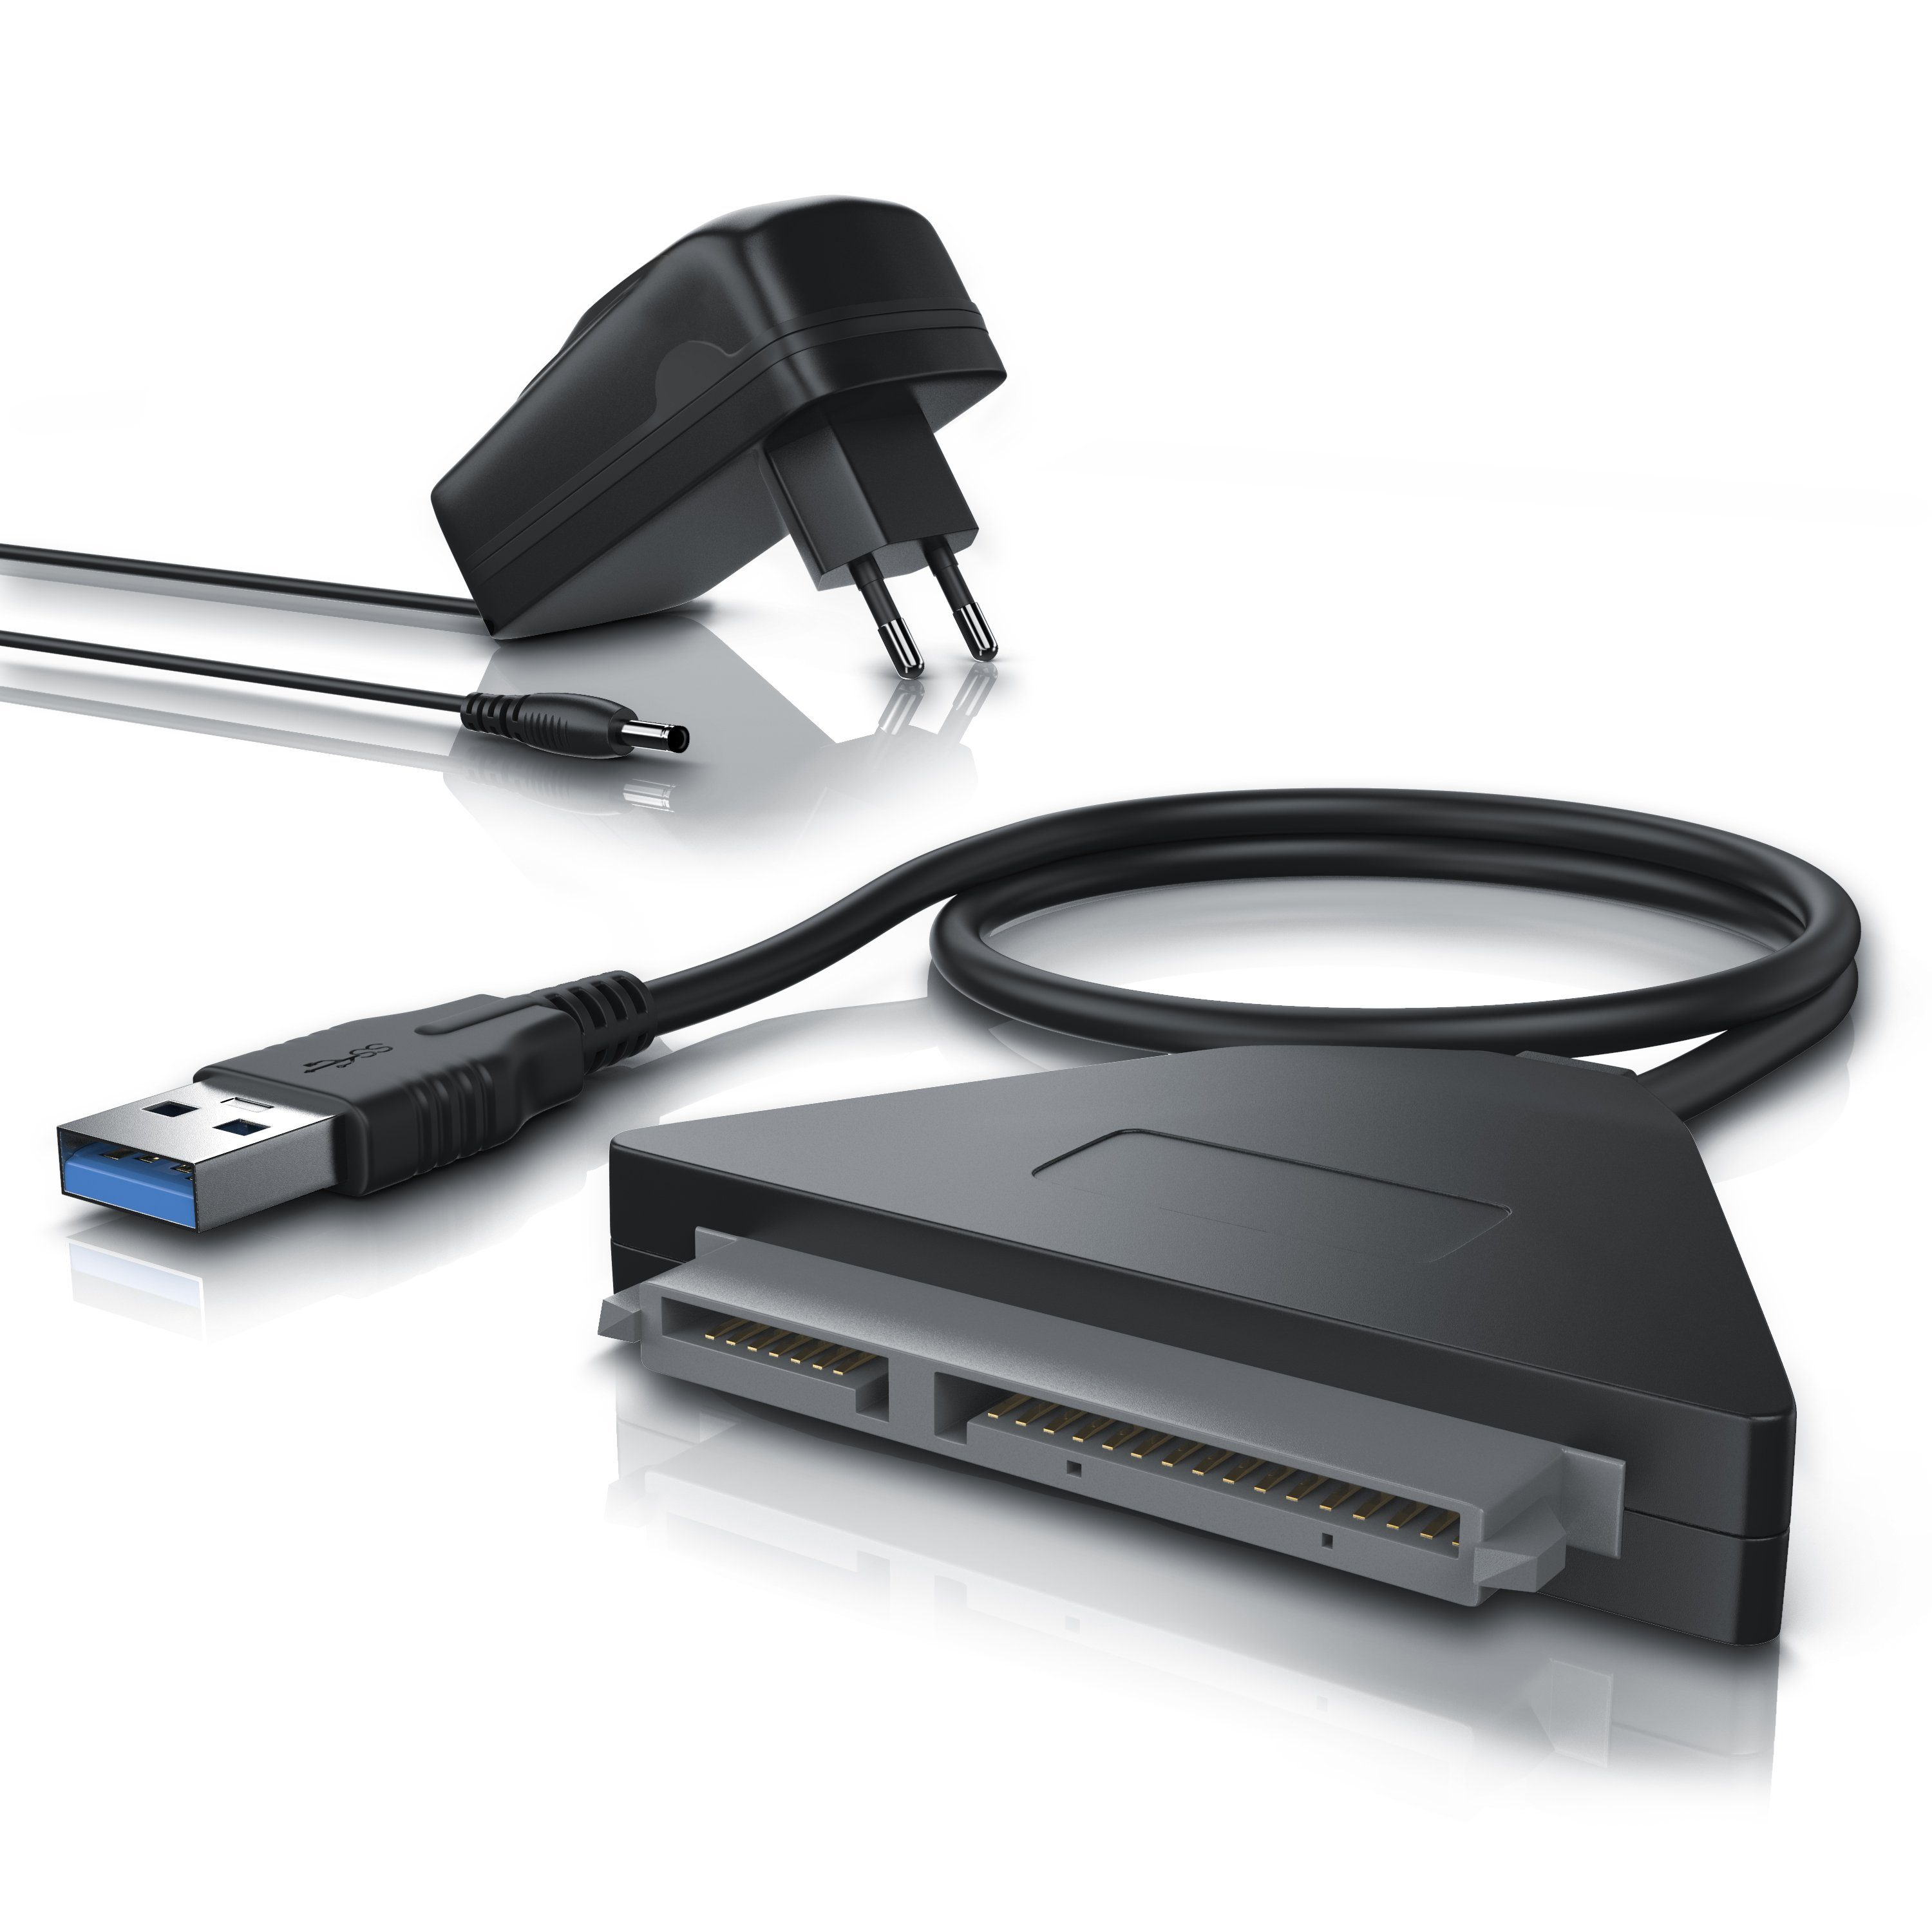 CSL Computer-Adapter zu SATA 3.0 / 6GB; USB 3.0 Typ A, USB 3.0 zu SATA  Adapter Kabel mit Netzteil - 2,5" & 3,5" SATA I/II/III HDD + SSD - UASP  online kaufen | OTTO